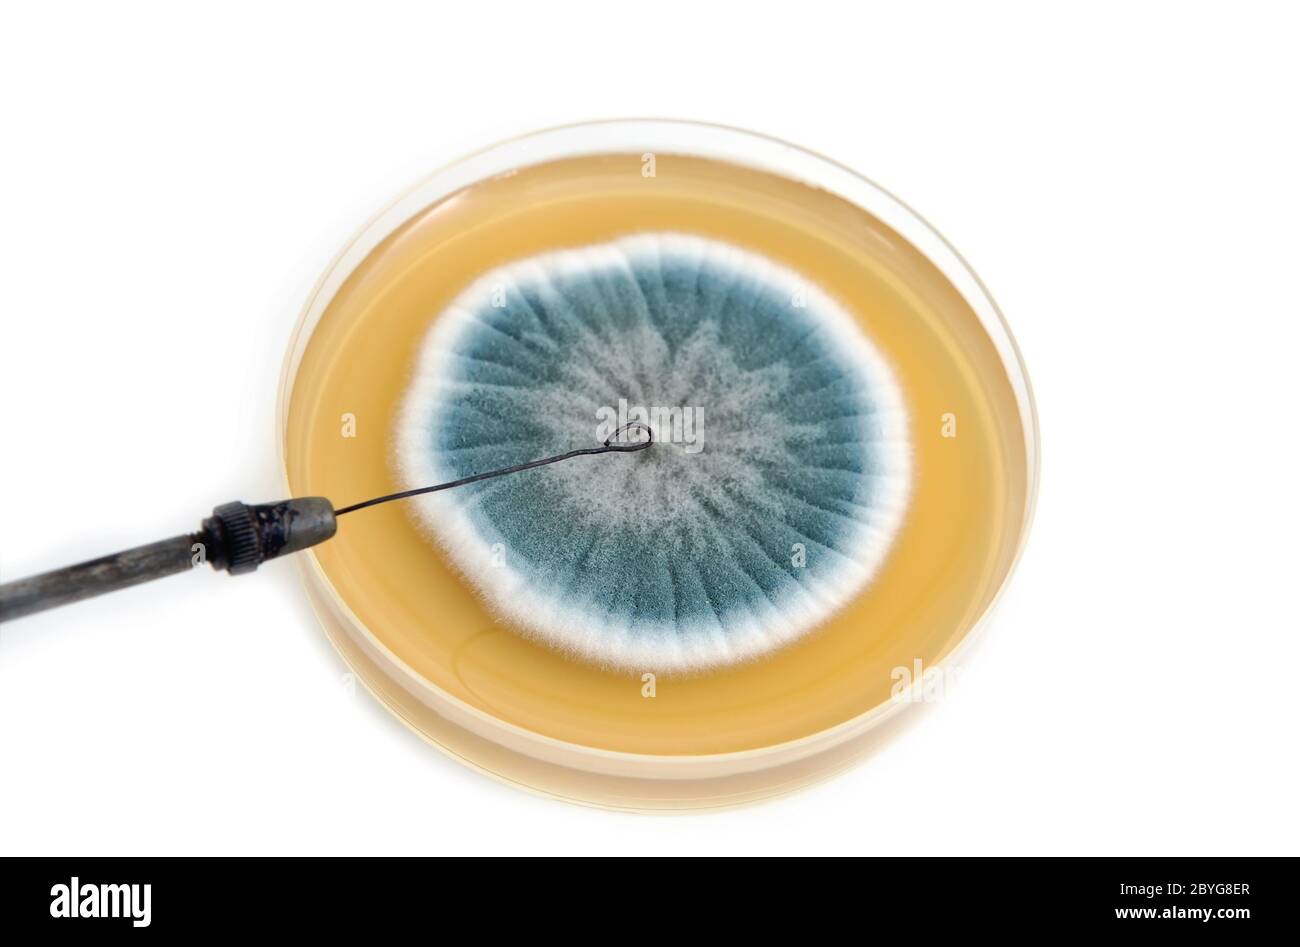 metal laboratory loop and fungi on agar plate Stock Photo